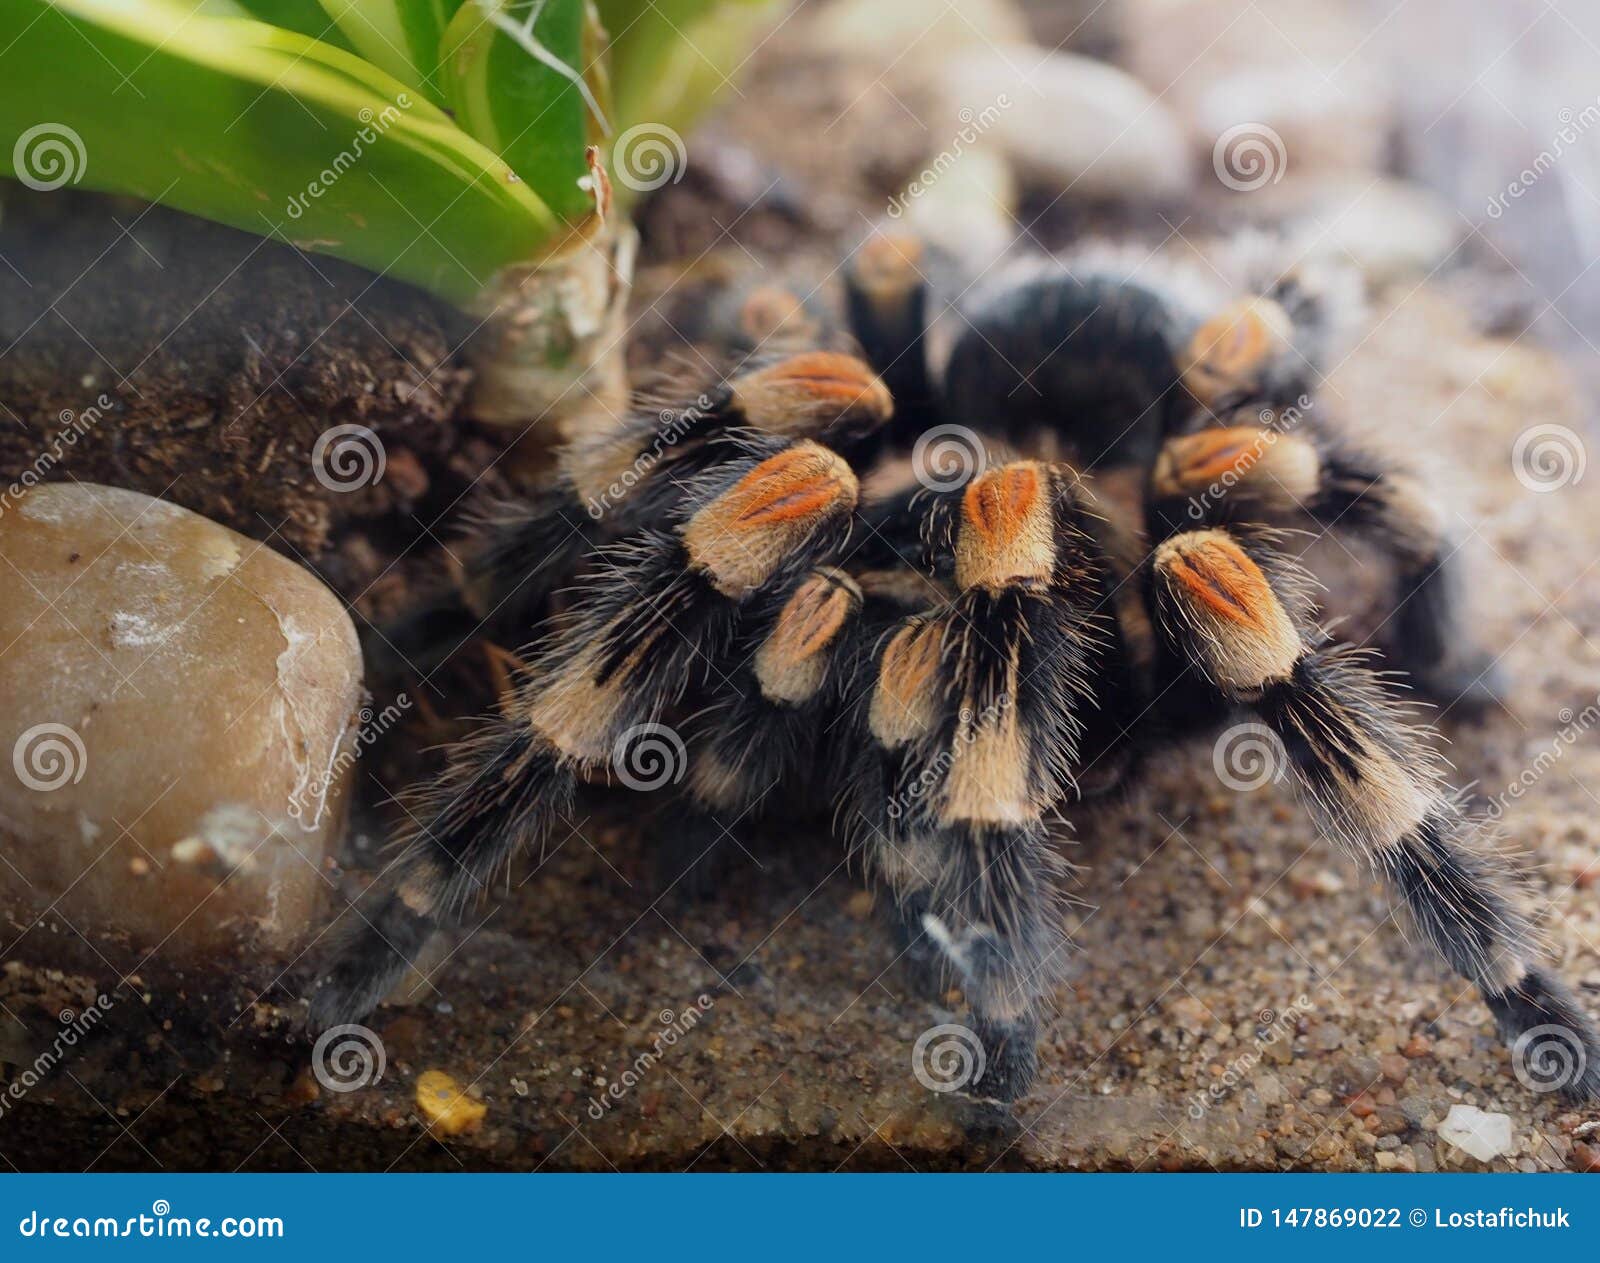 Mexican Tarantula Spider or Brachypelma Smithi Stock Photo - Image of ...